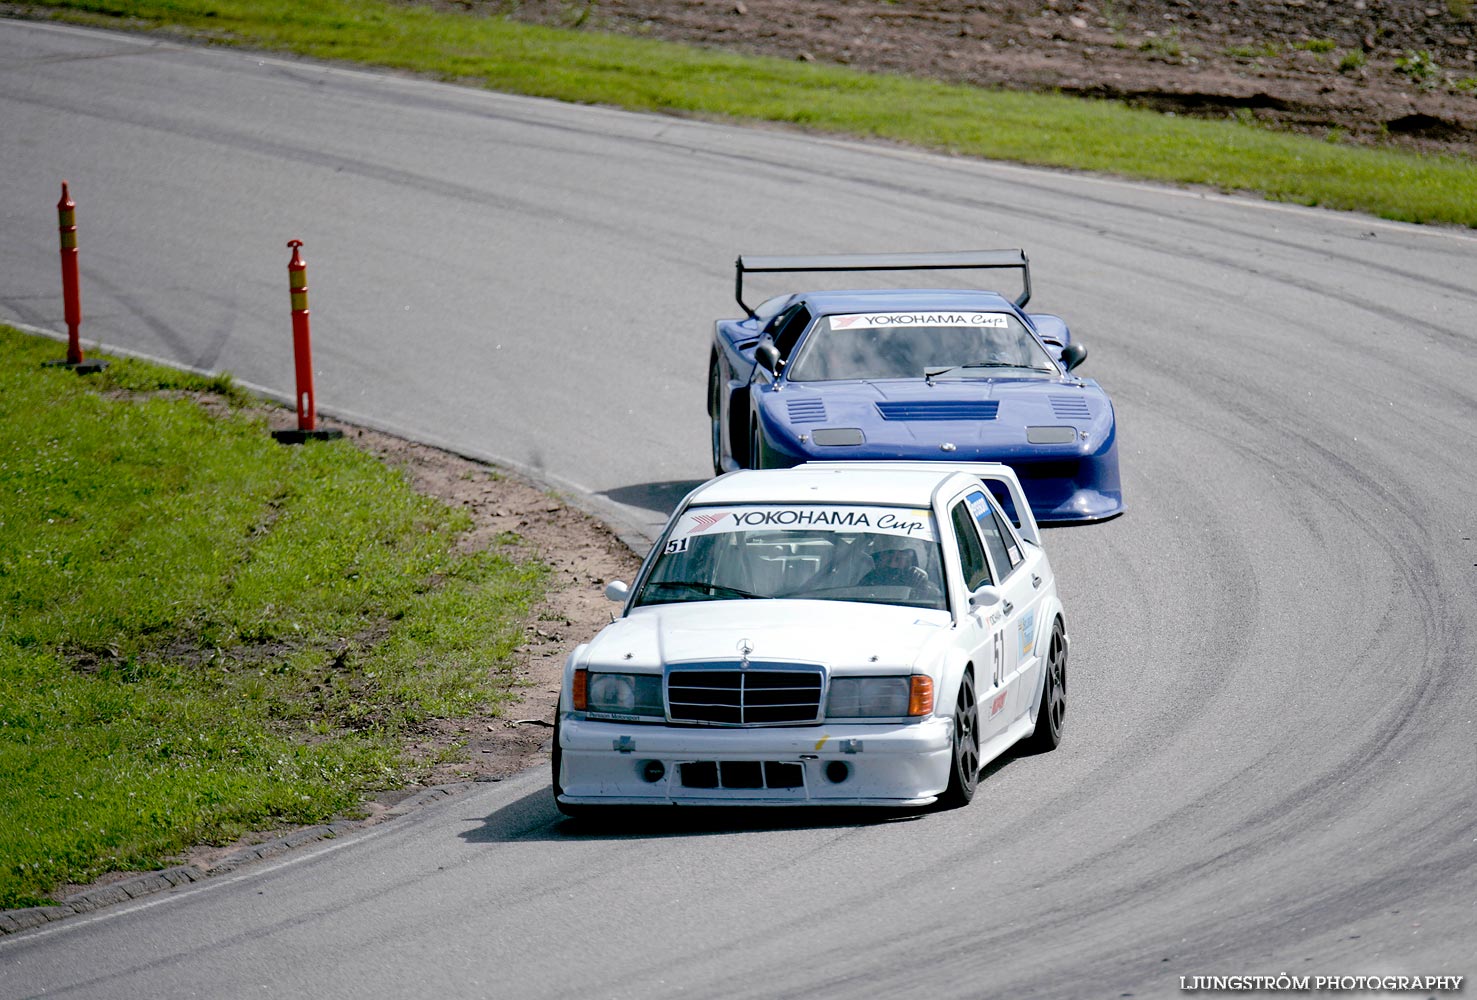 SSK Raceweek,mix,Kinnekulle Ring,Götene,Sverige,Motorsport,,2009,107524